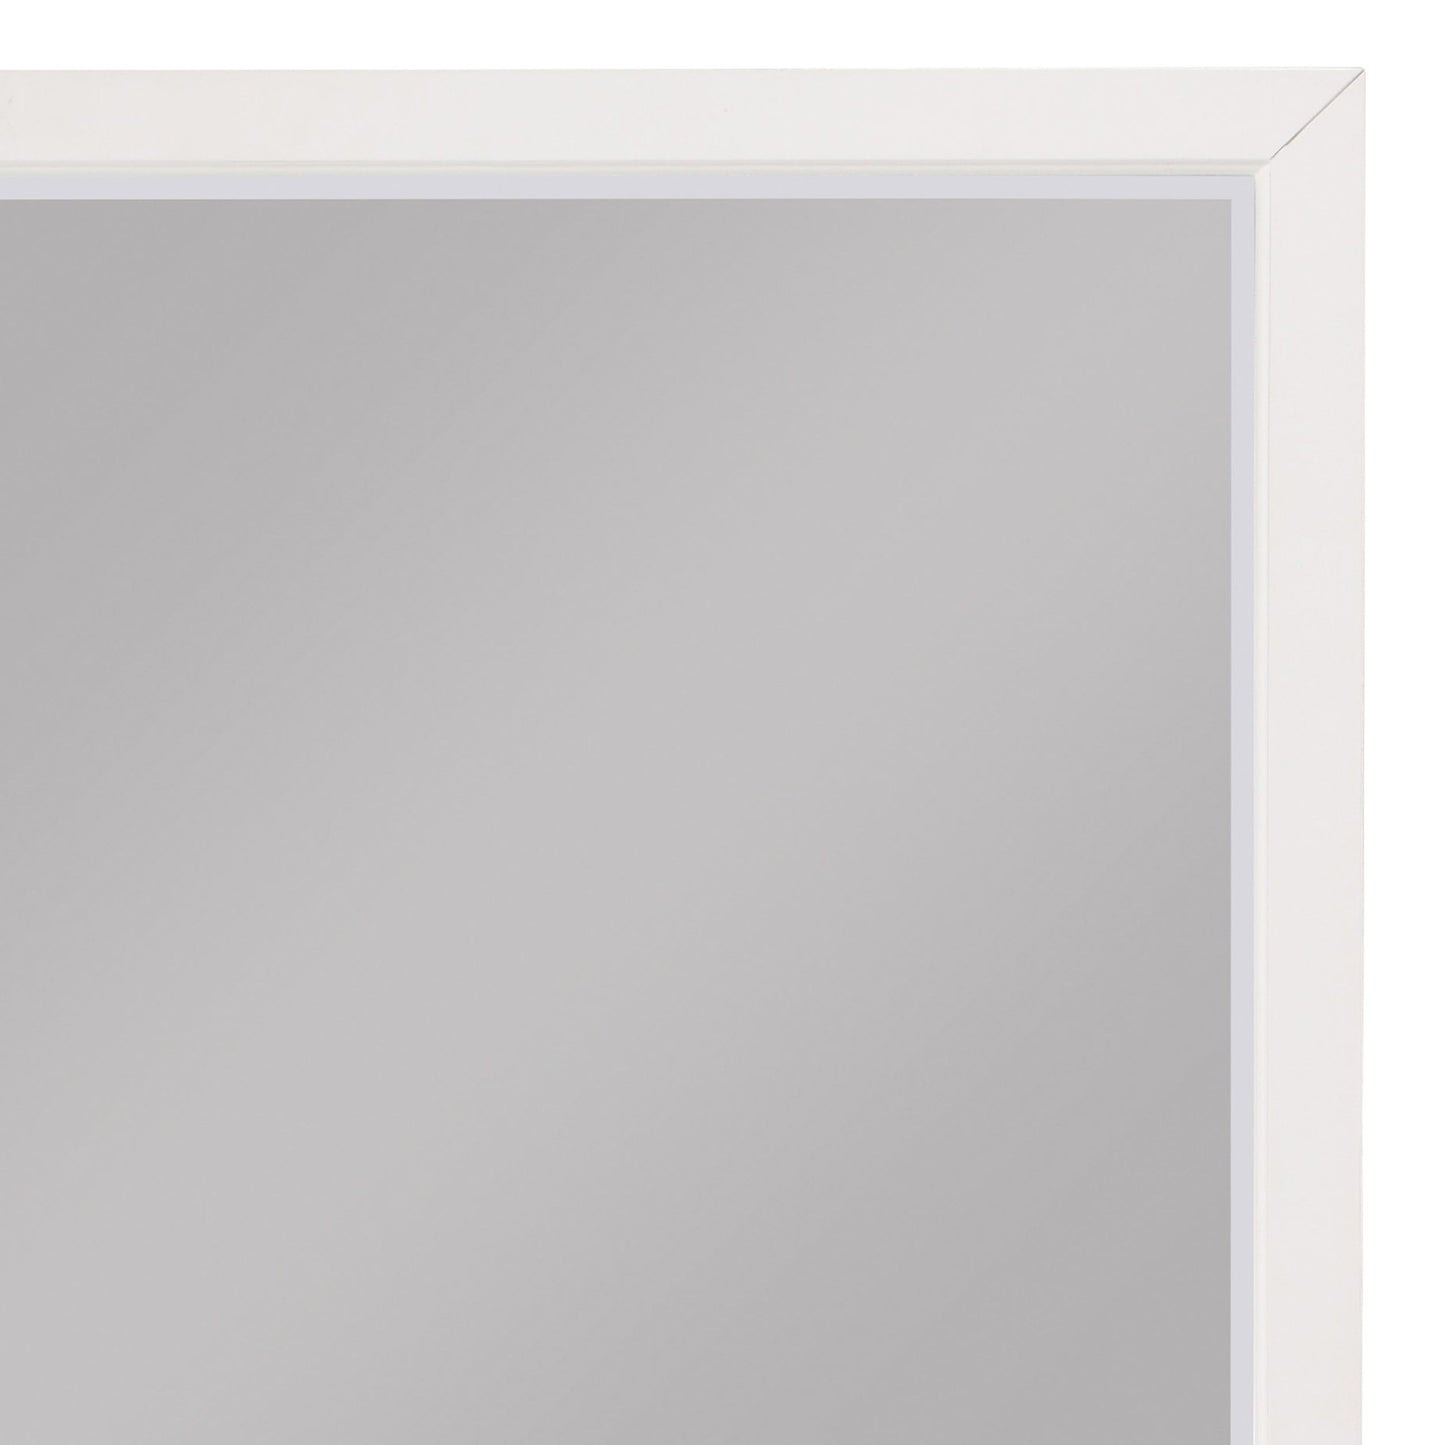 Benzara White Transitional Style Square Wooden Frame Mirror